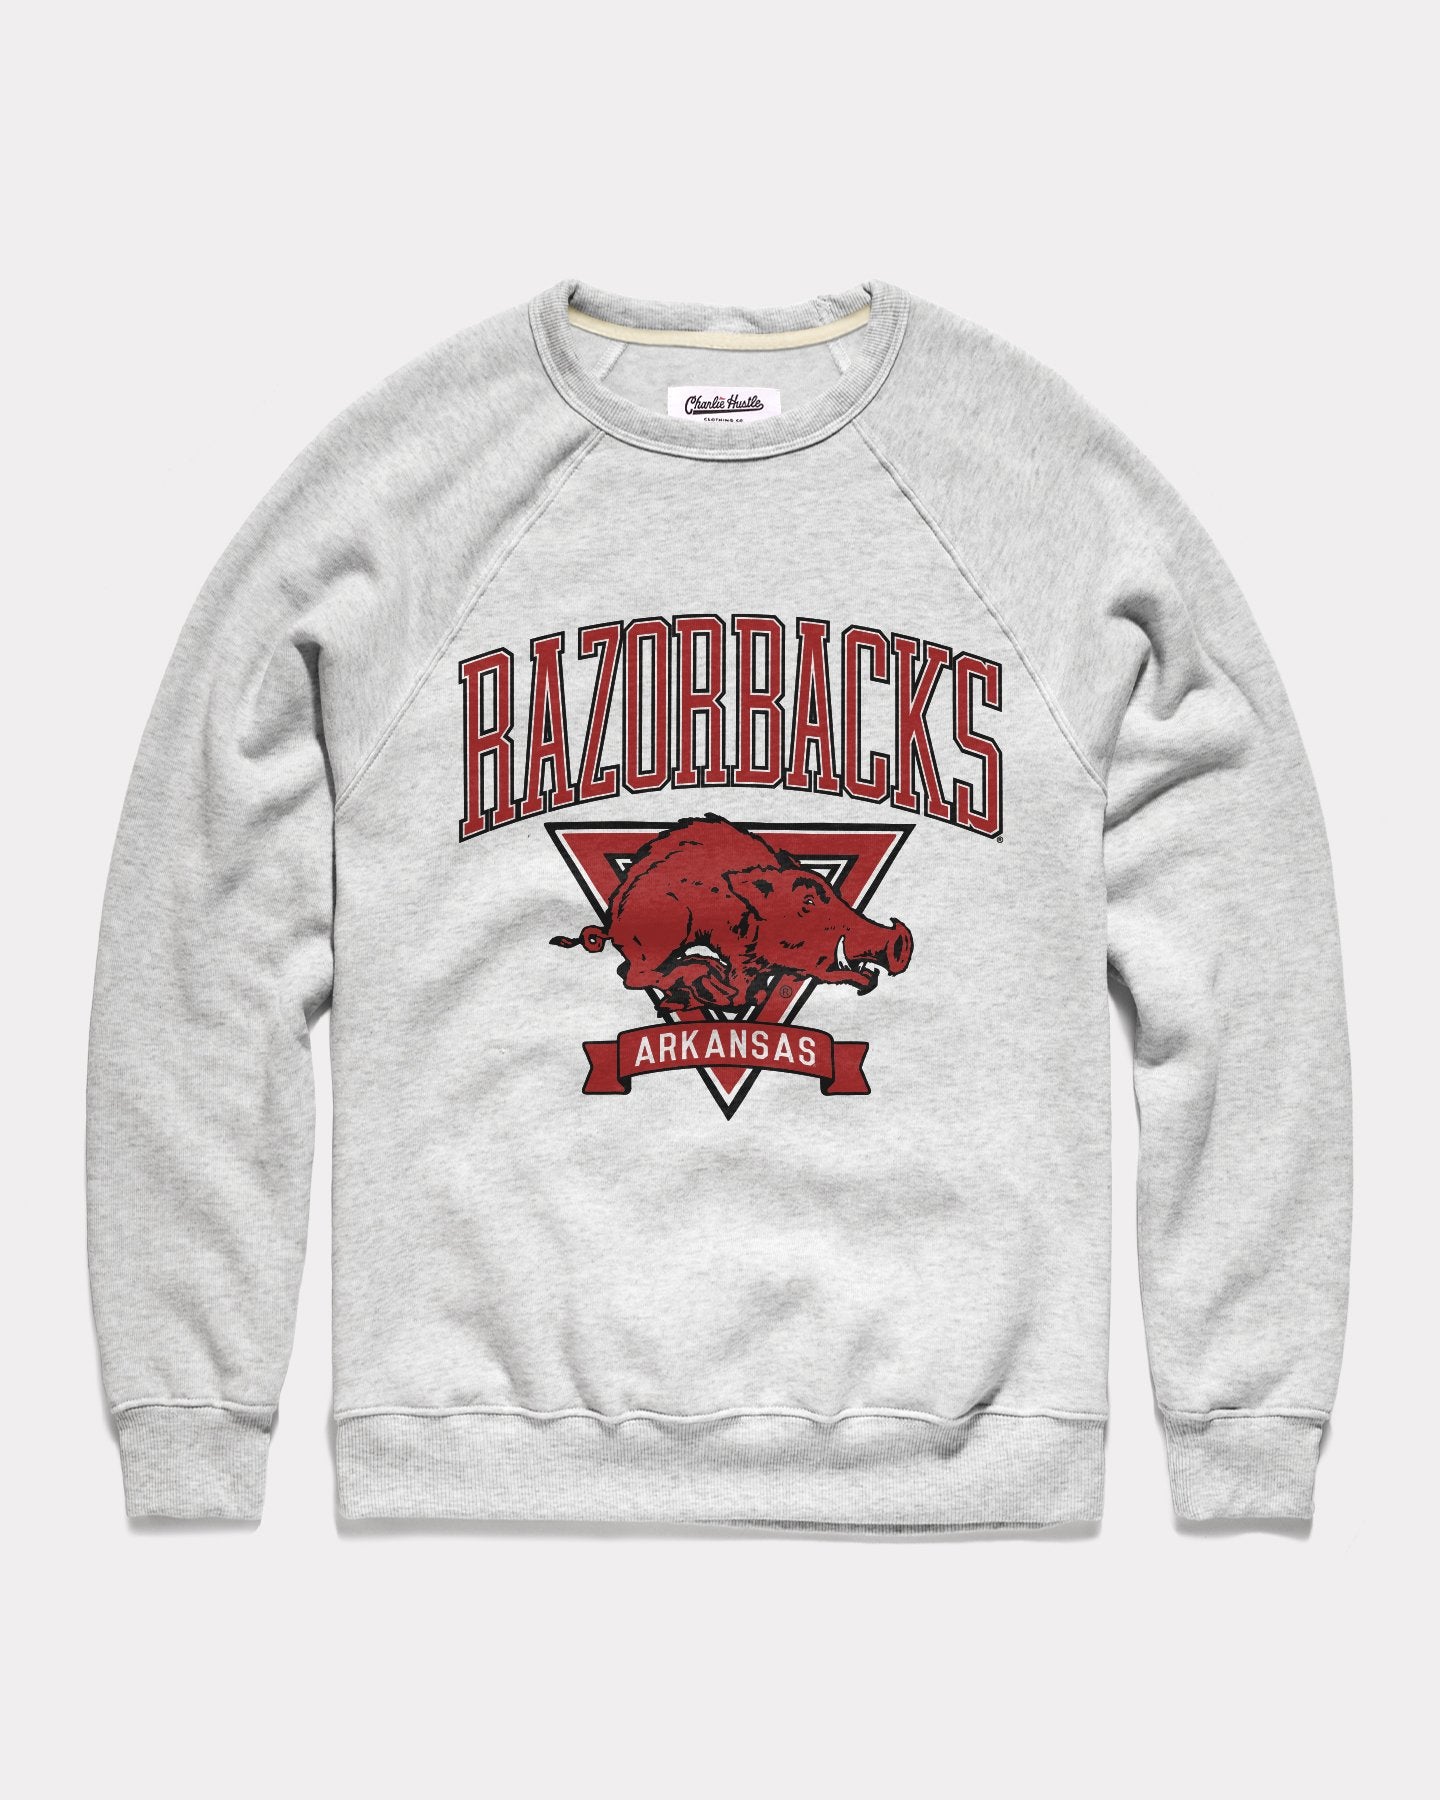 Arkansas Razorbacks Showcase Vintage Ash Grey Crewneck Sweatshirt